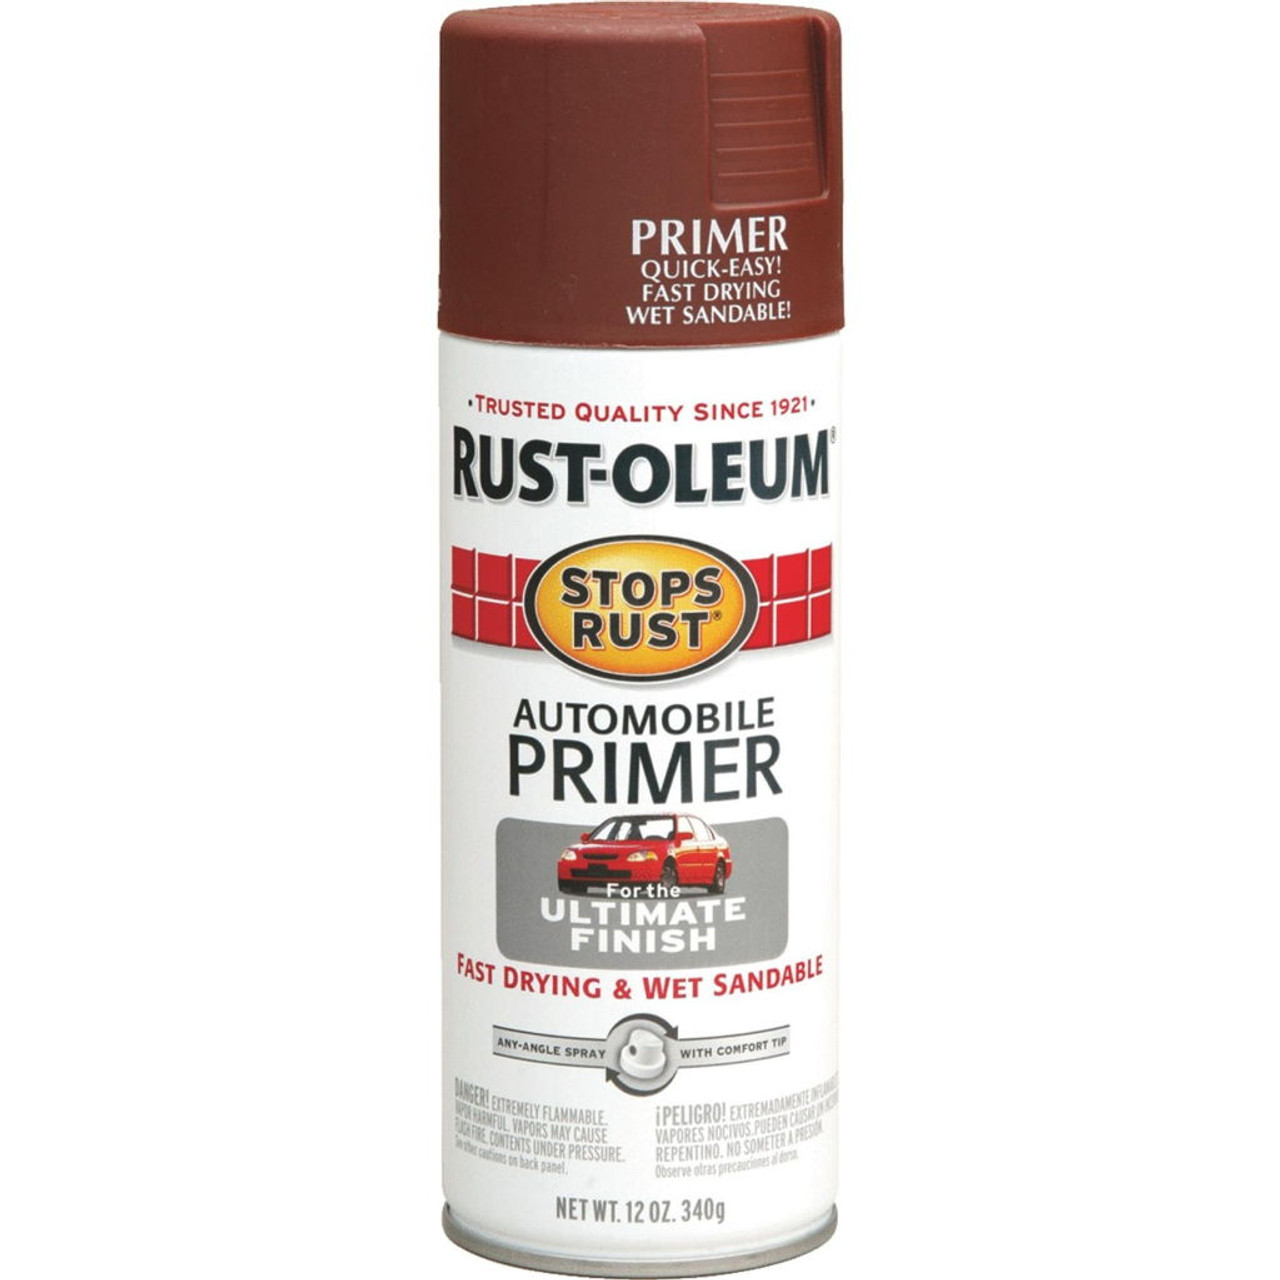 Rust-Oleum Professional Flat Gray Spray Primer (NET WT. 15-oz) at